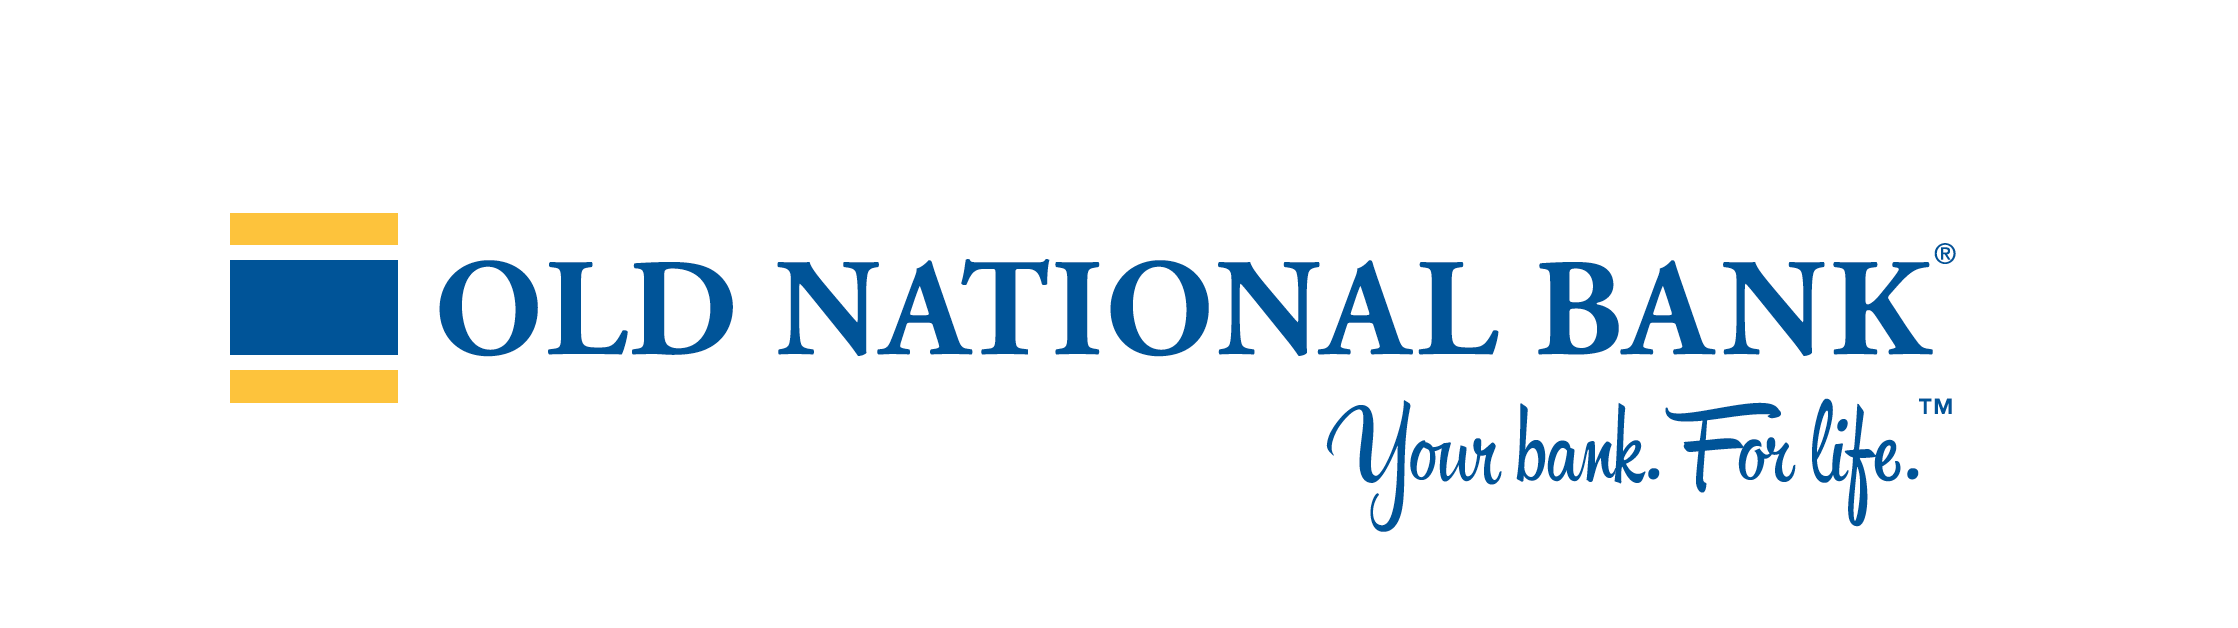 Old-National-Bank-New-logo